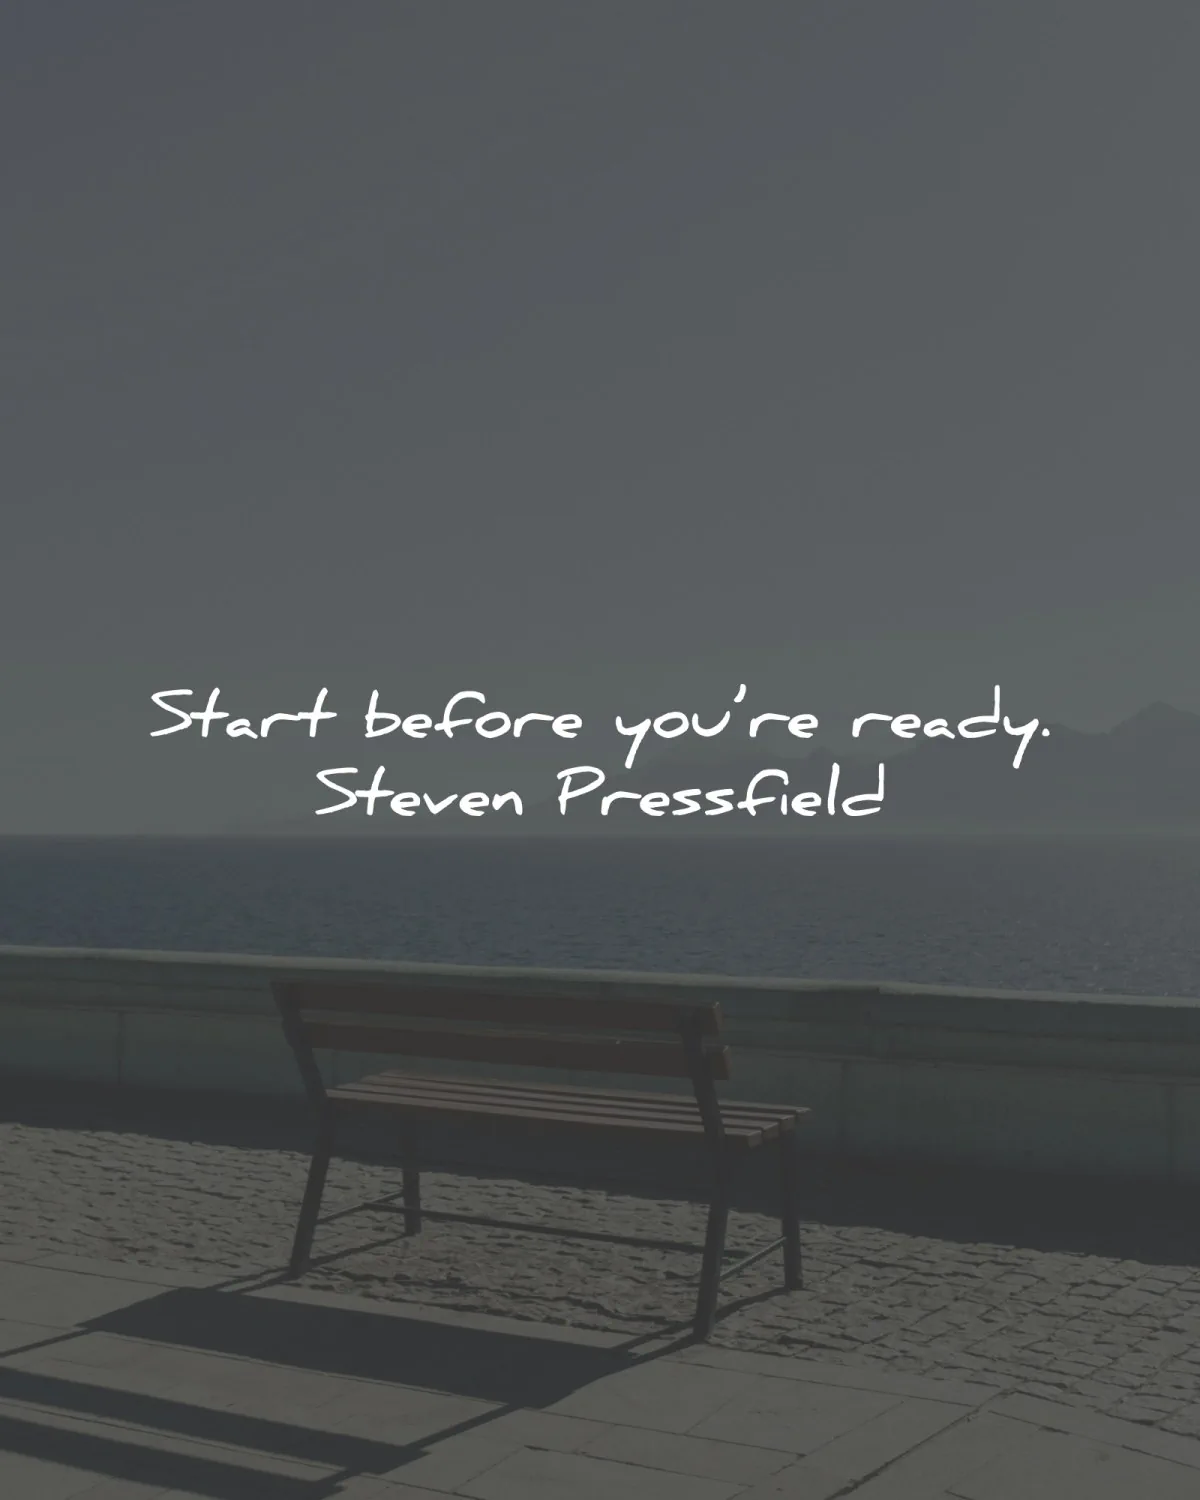 procrastination quotes start before ready steven pressfield wisdom